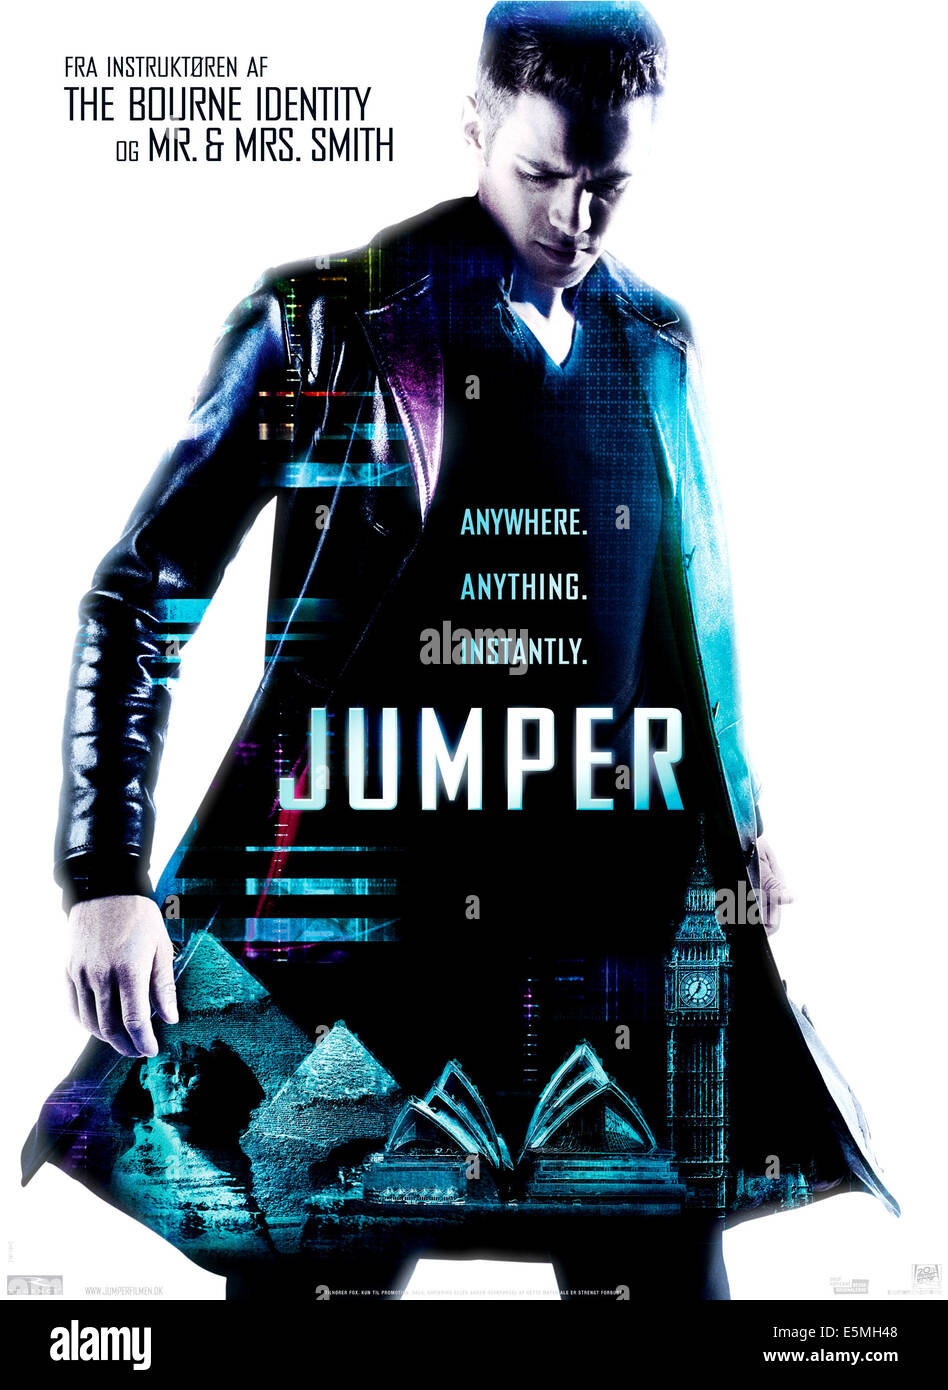 JUMPER, Hayden Christensen, 2008. TM &©20th Century Fox. All rights reserved/courtesy Everett Collection Stock Photo